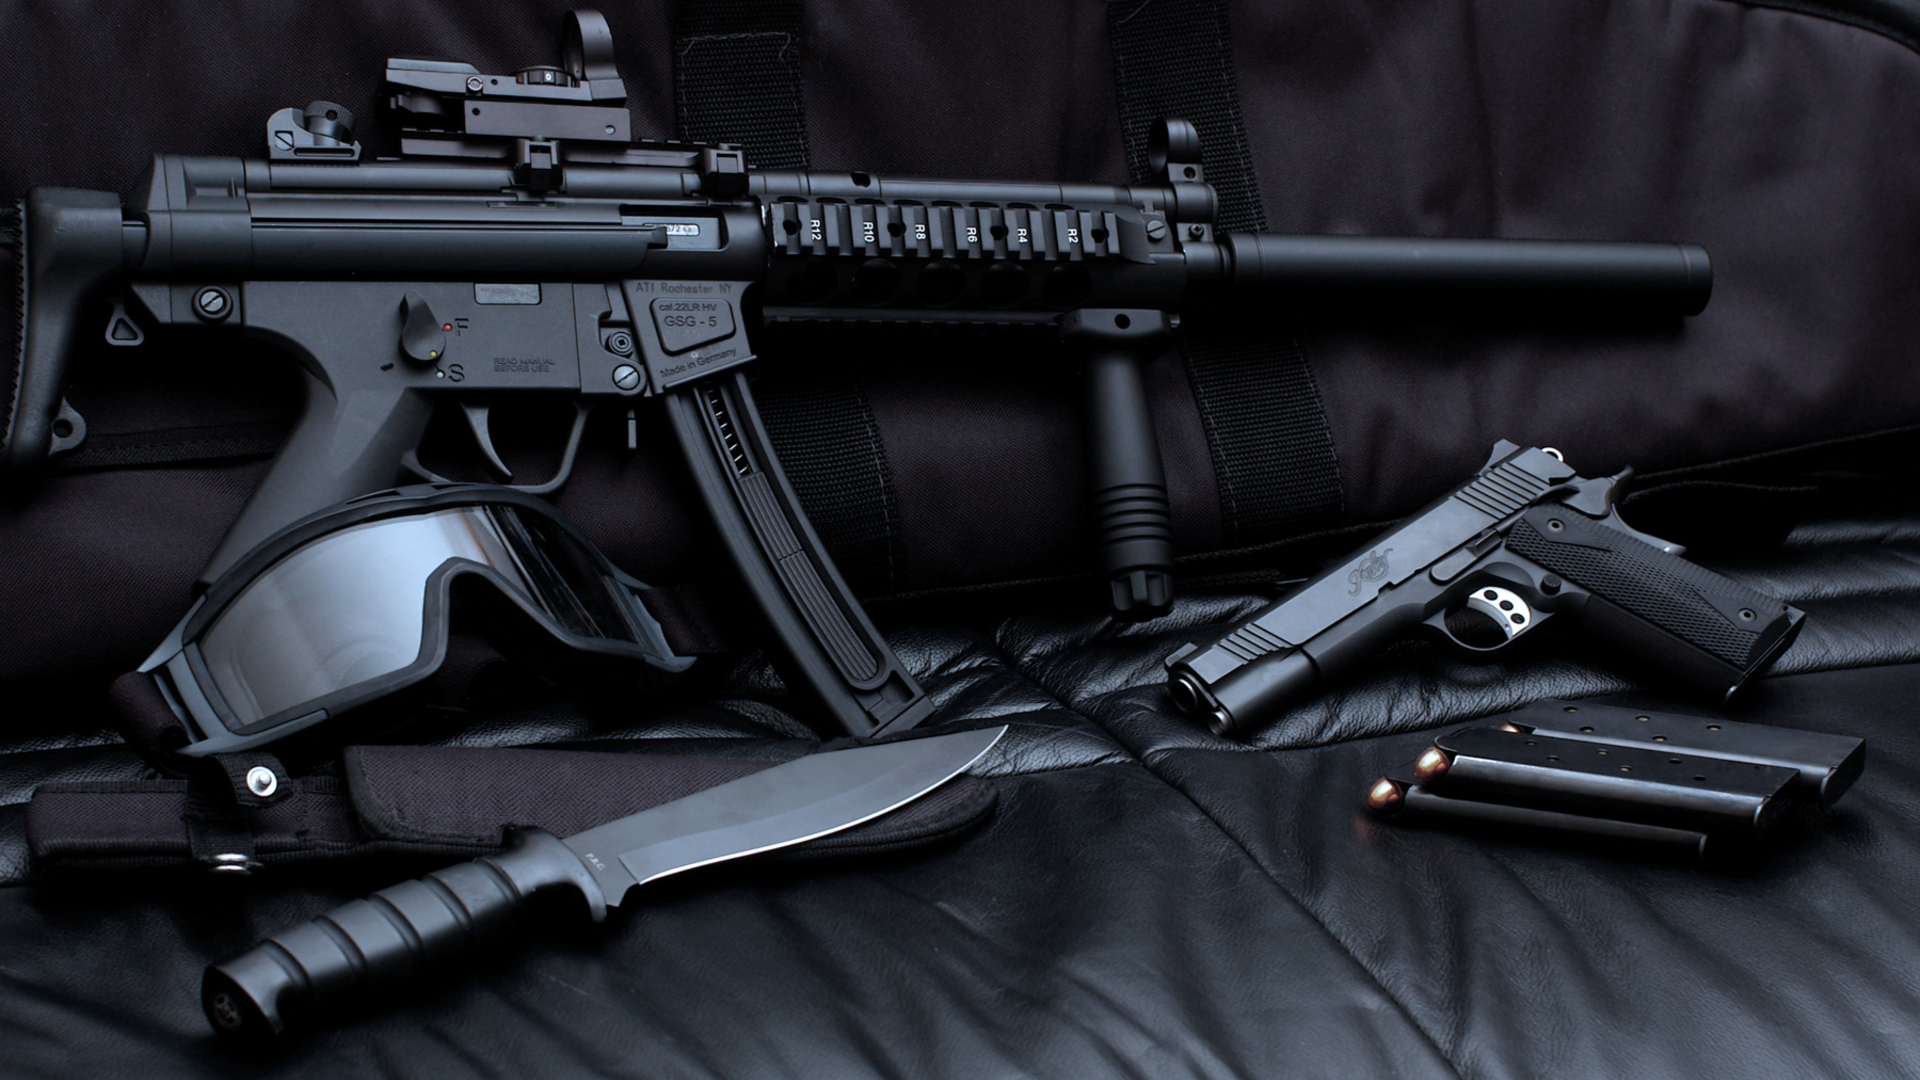 Sniper Gun Pistol Ammo Collection Wallpaper   StylishHDWallpapers